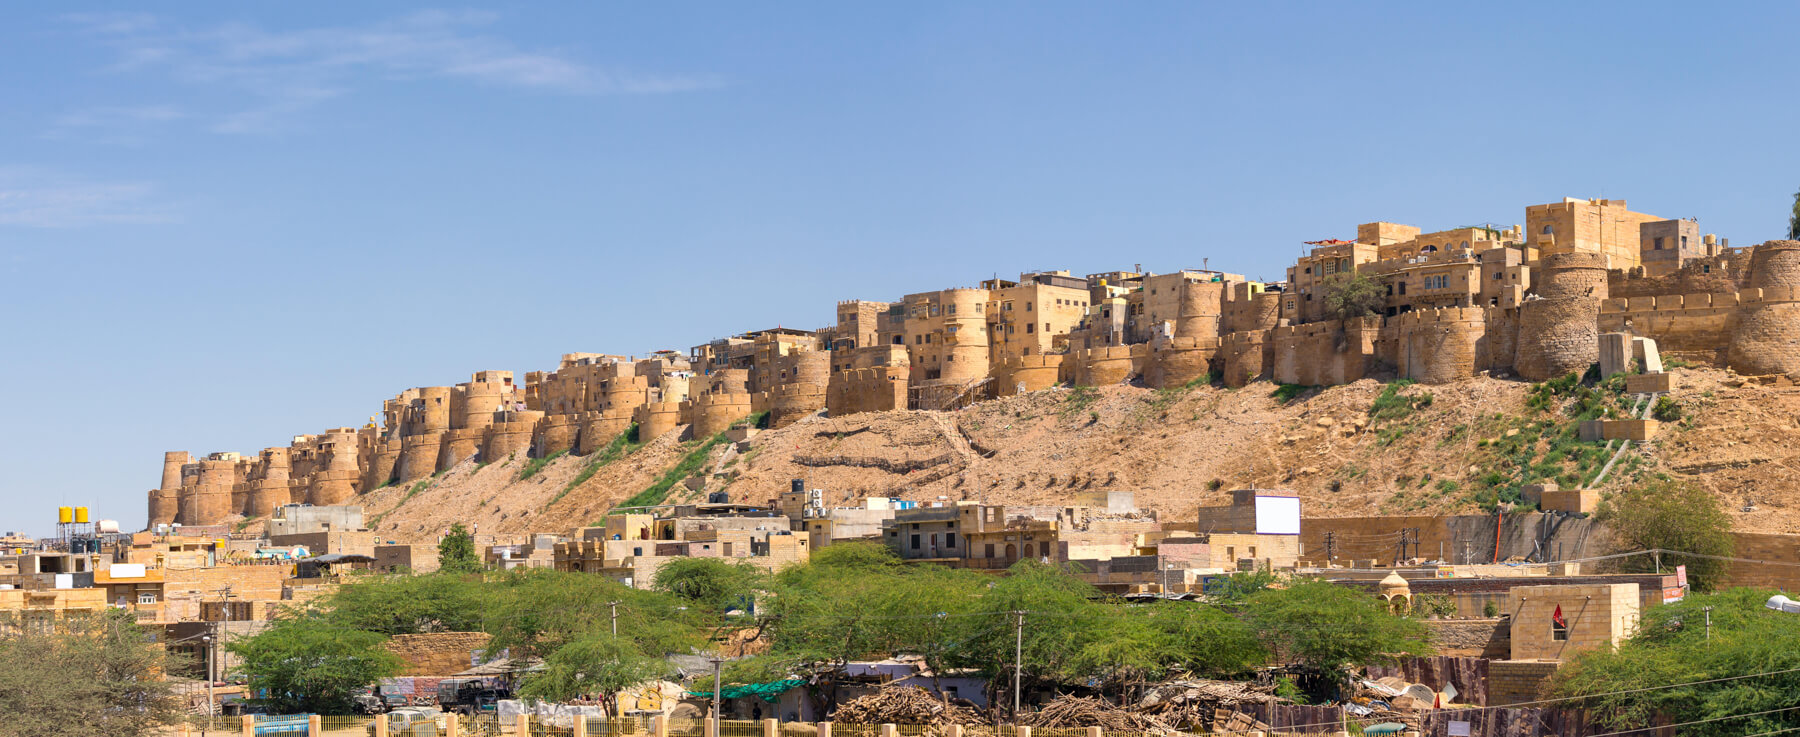 Jaisalmer , Rajasthan, India | Travel aesthetic, India photography, Places to travel